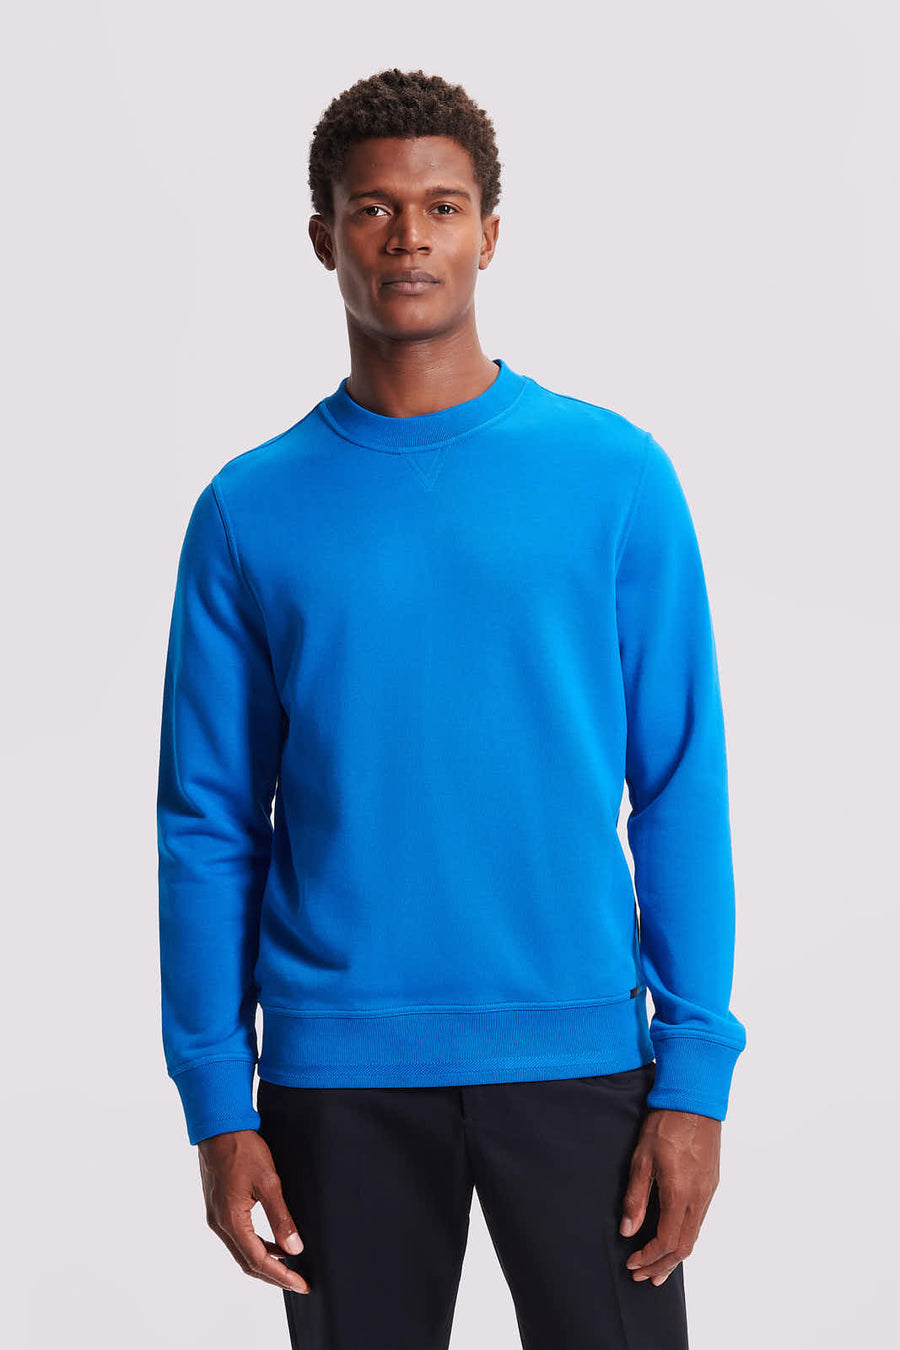 French Terry Crew Neck Sweatshirt Cobalt Blue